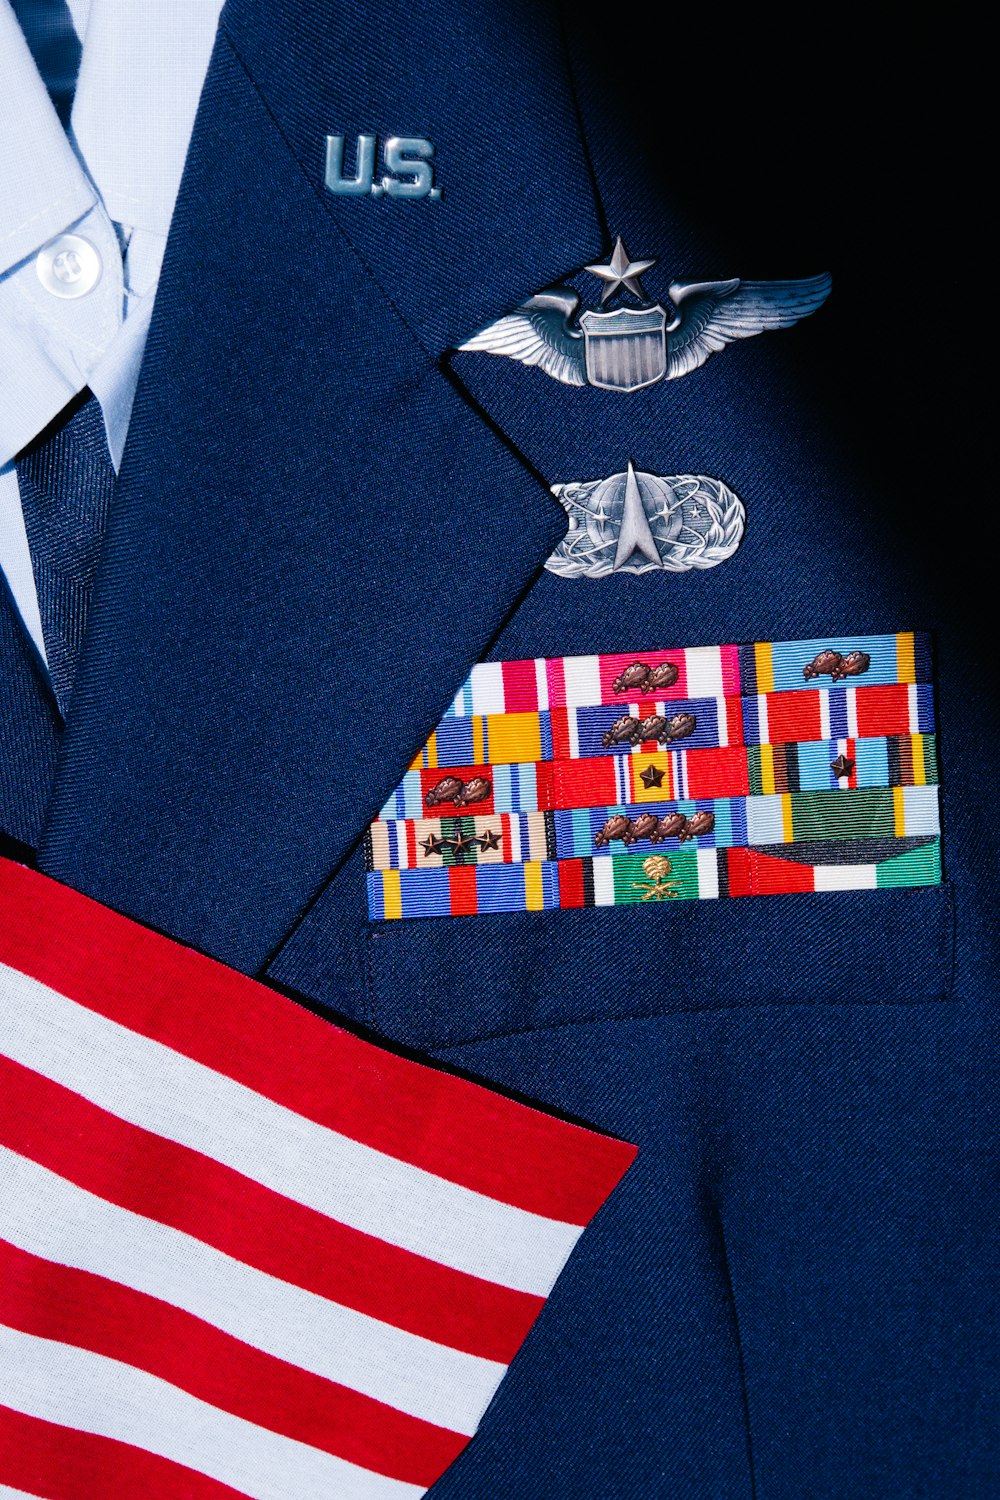 a close up of a uniform with a flag